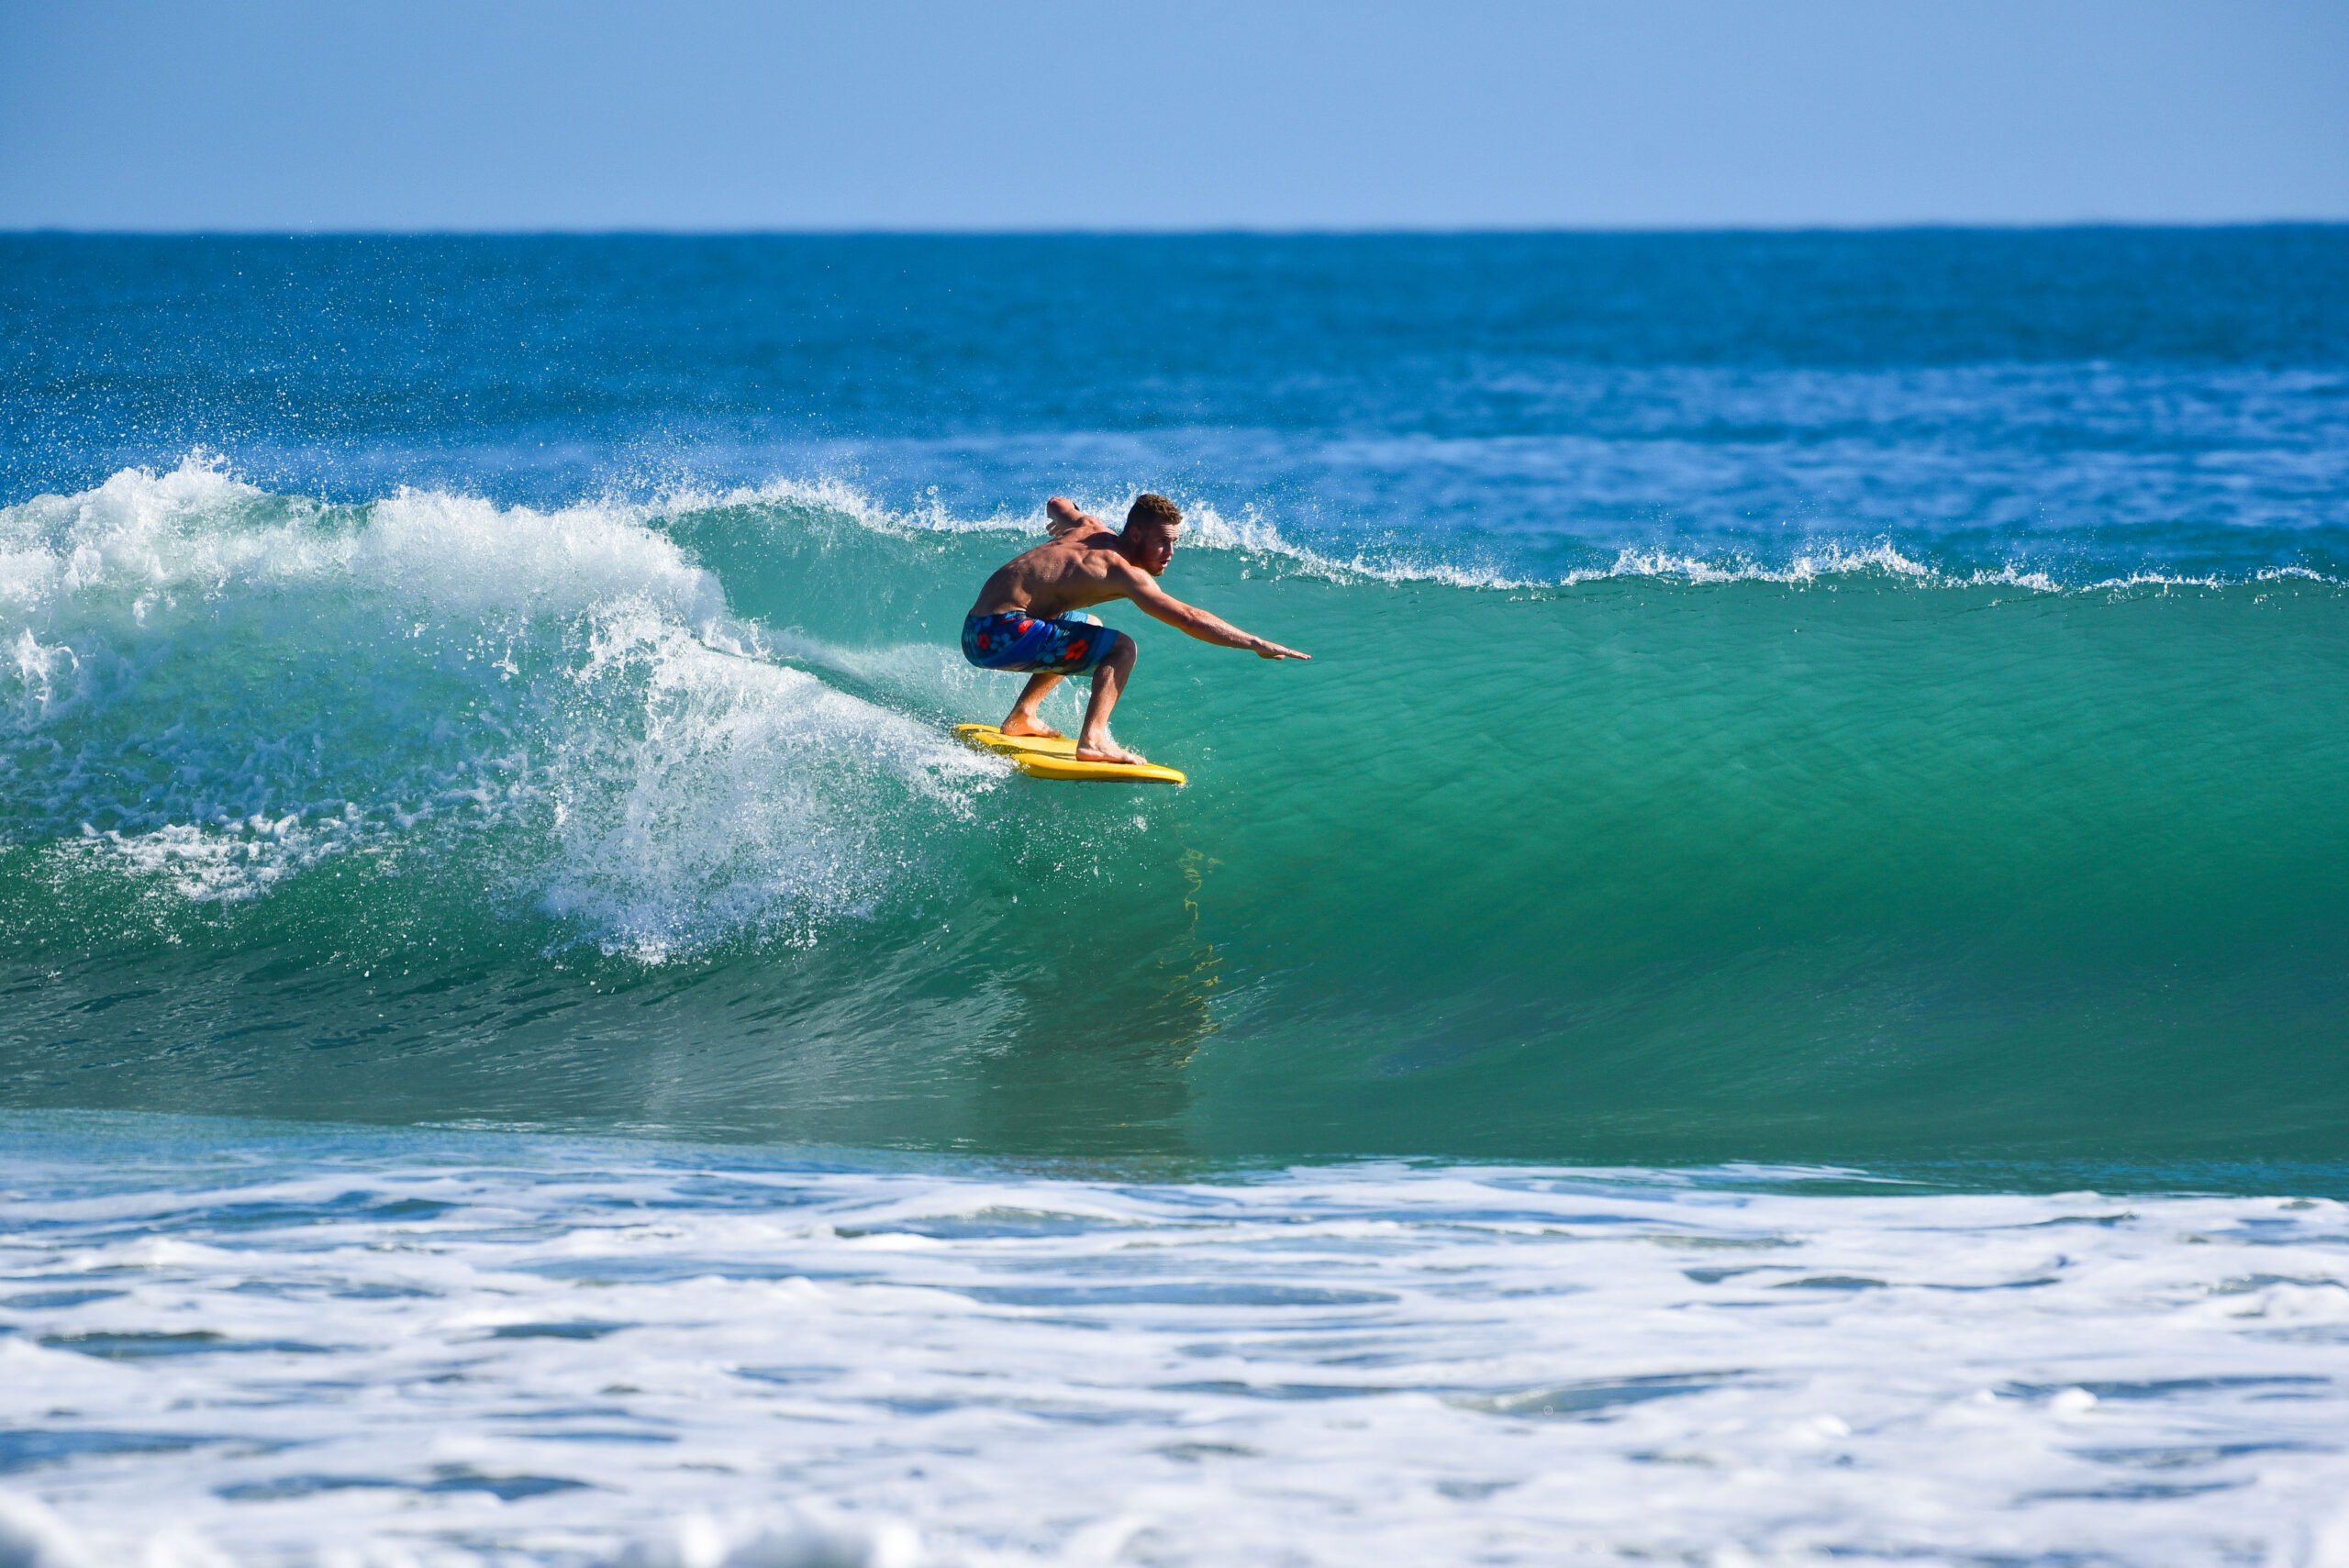 A surfer riding a wave in Melbourne Beach, FL